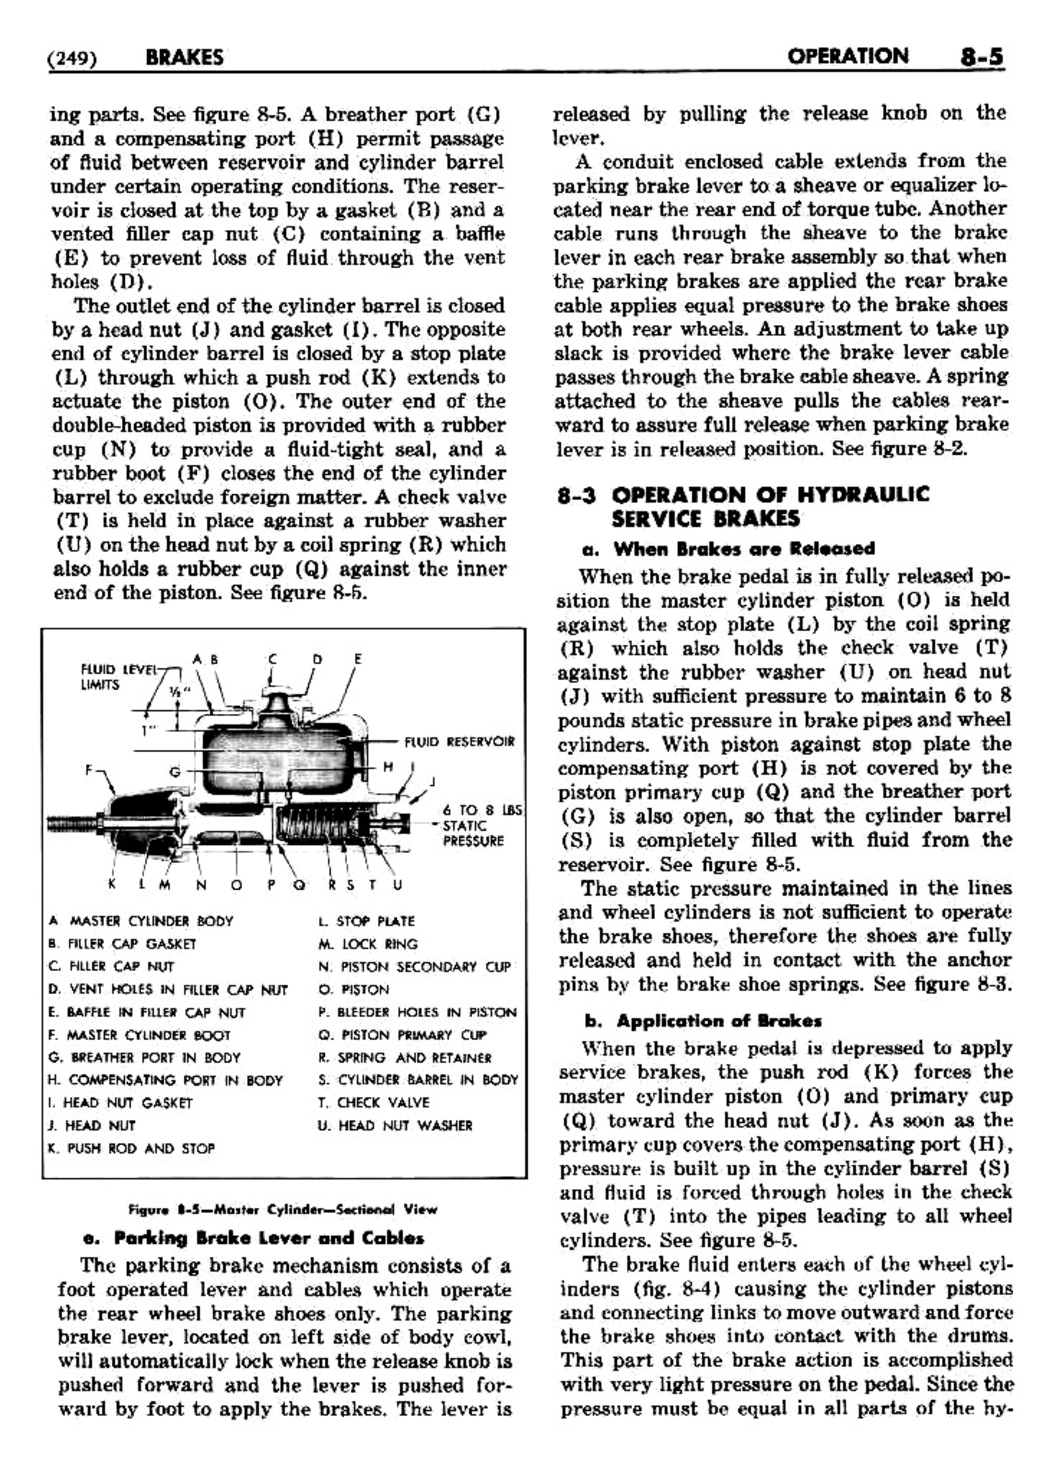 n_09 1948 Buick Shop Manual - Brakes-005-005.jpg